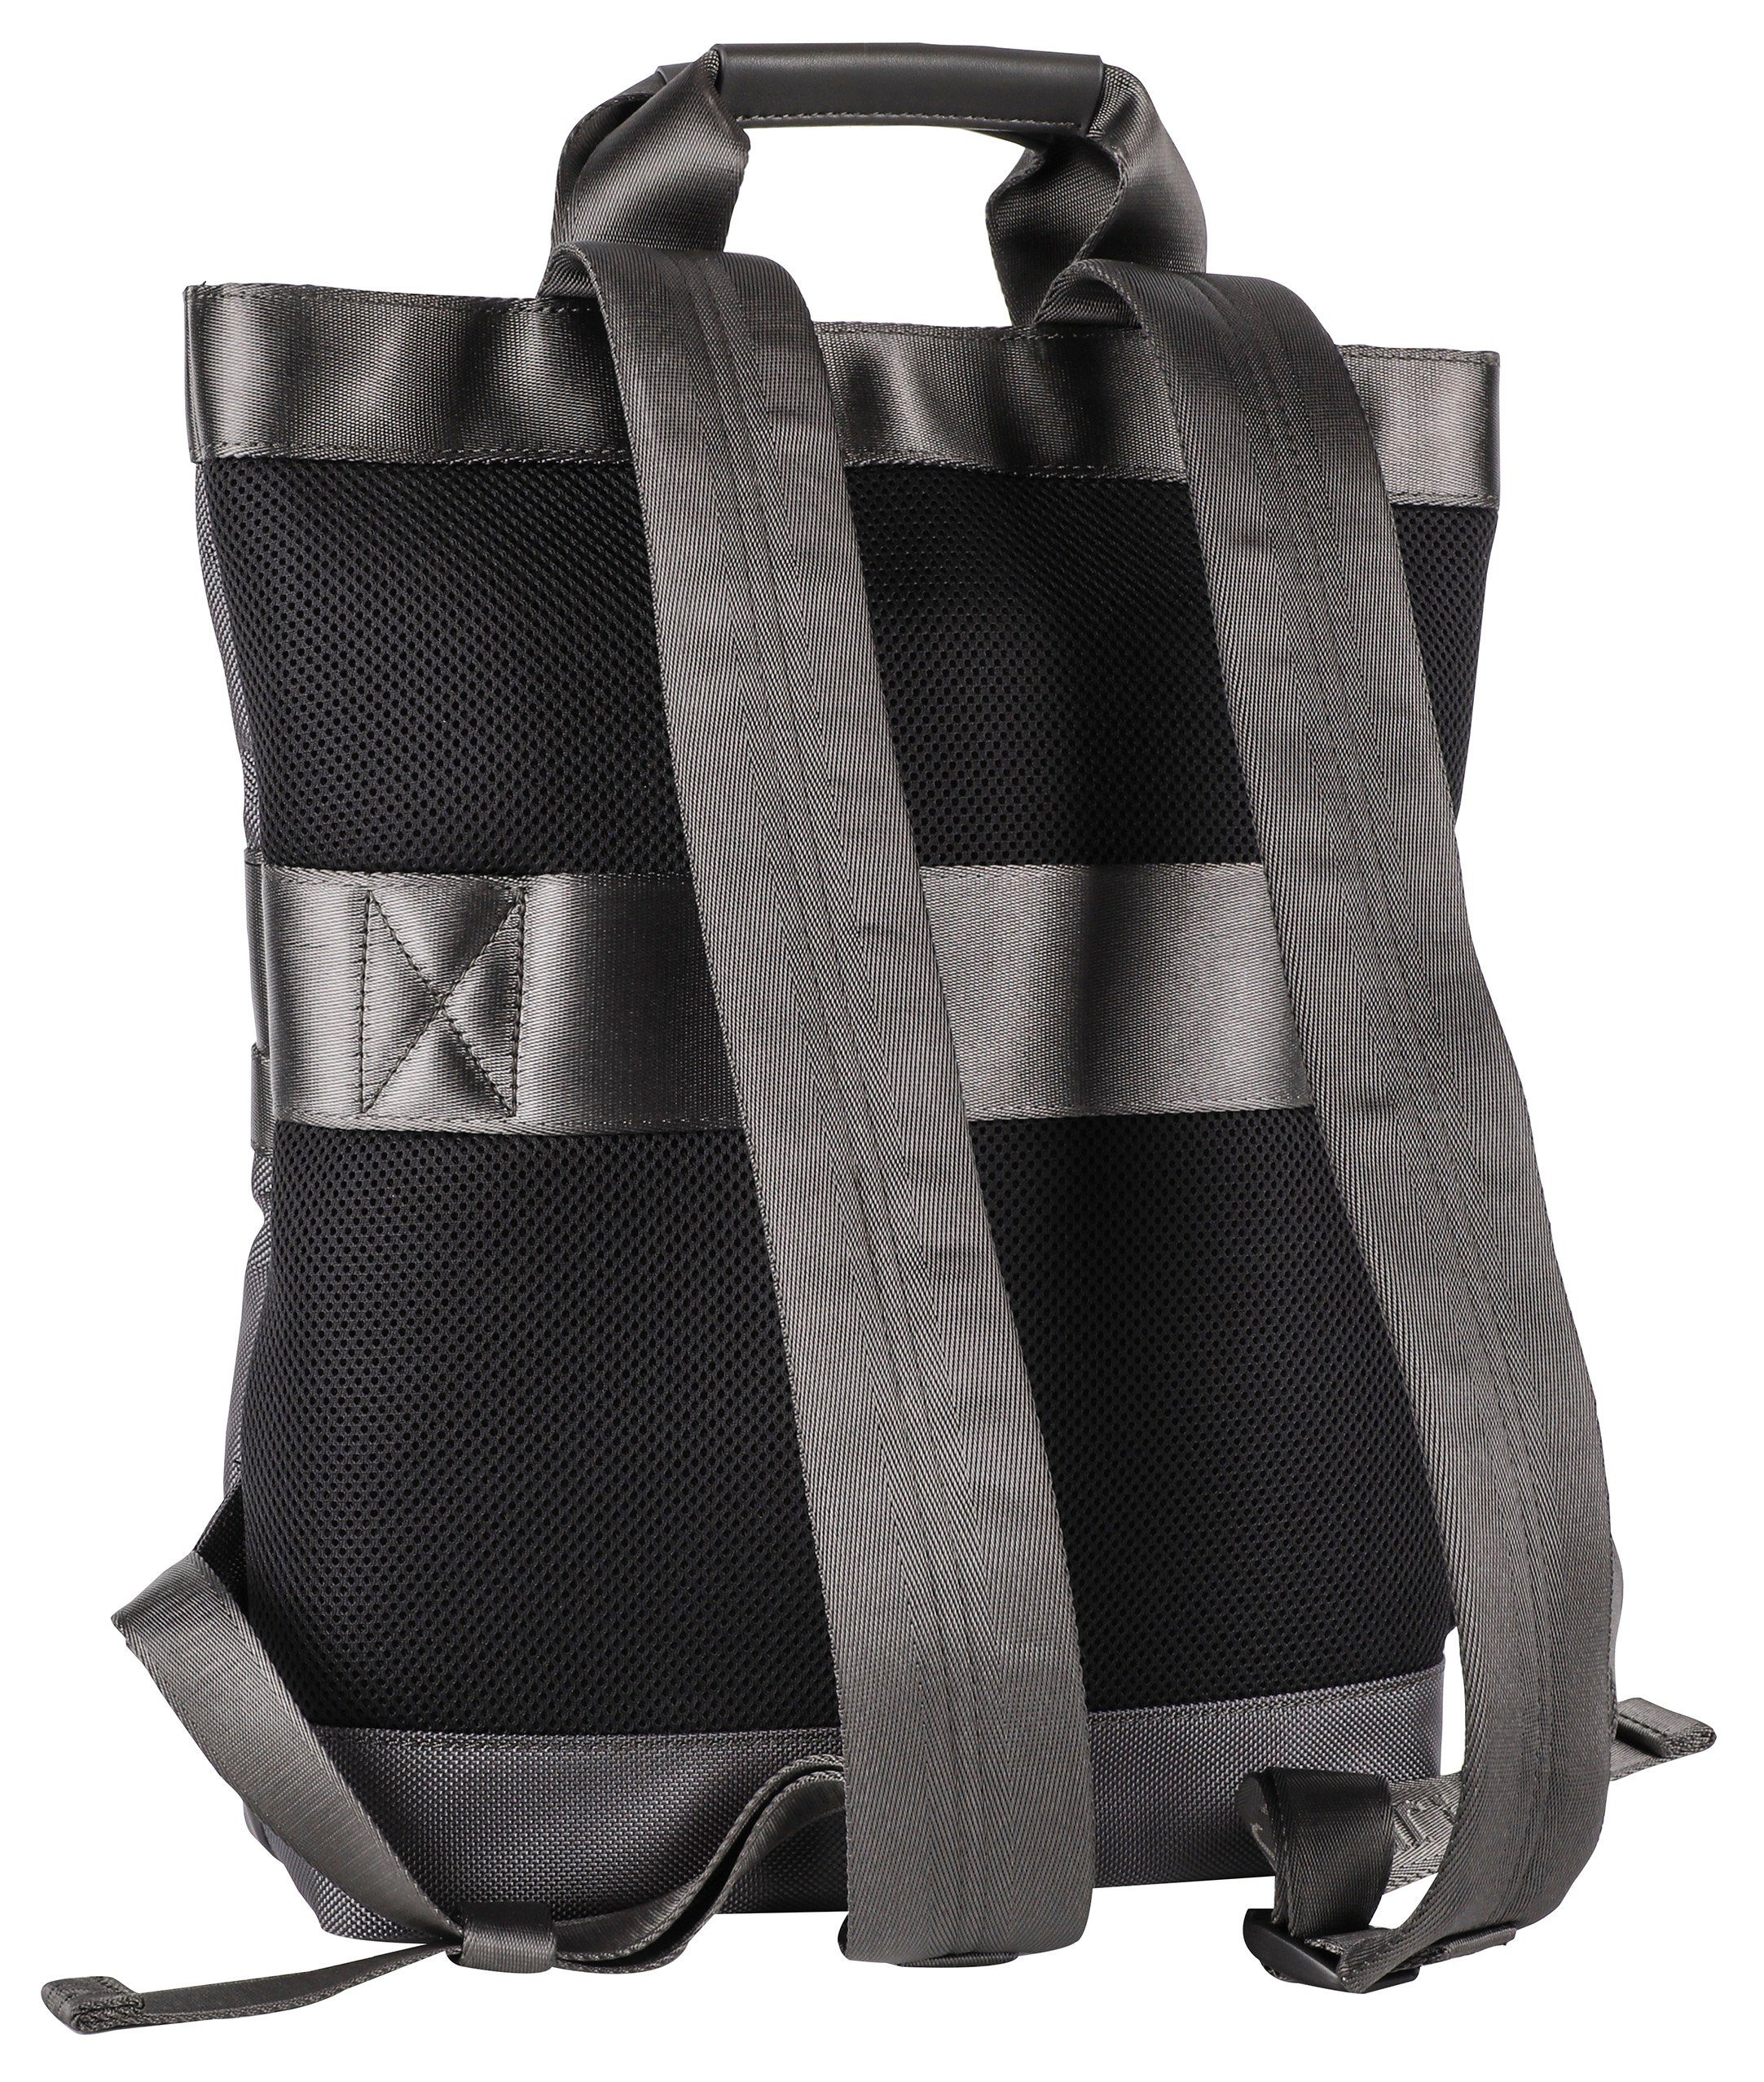 Joop Jeans Cityrucksack backpack dunkelgrau Reißverschluss-Vortasche modica svz, falk mit